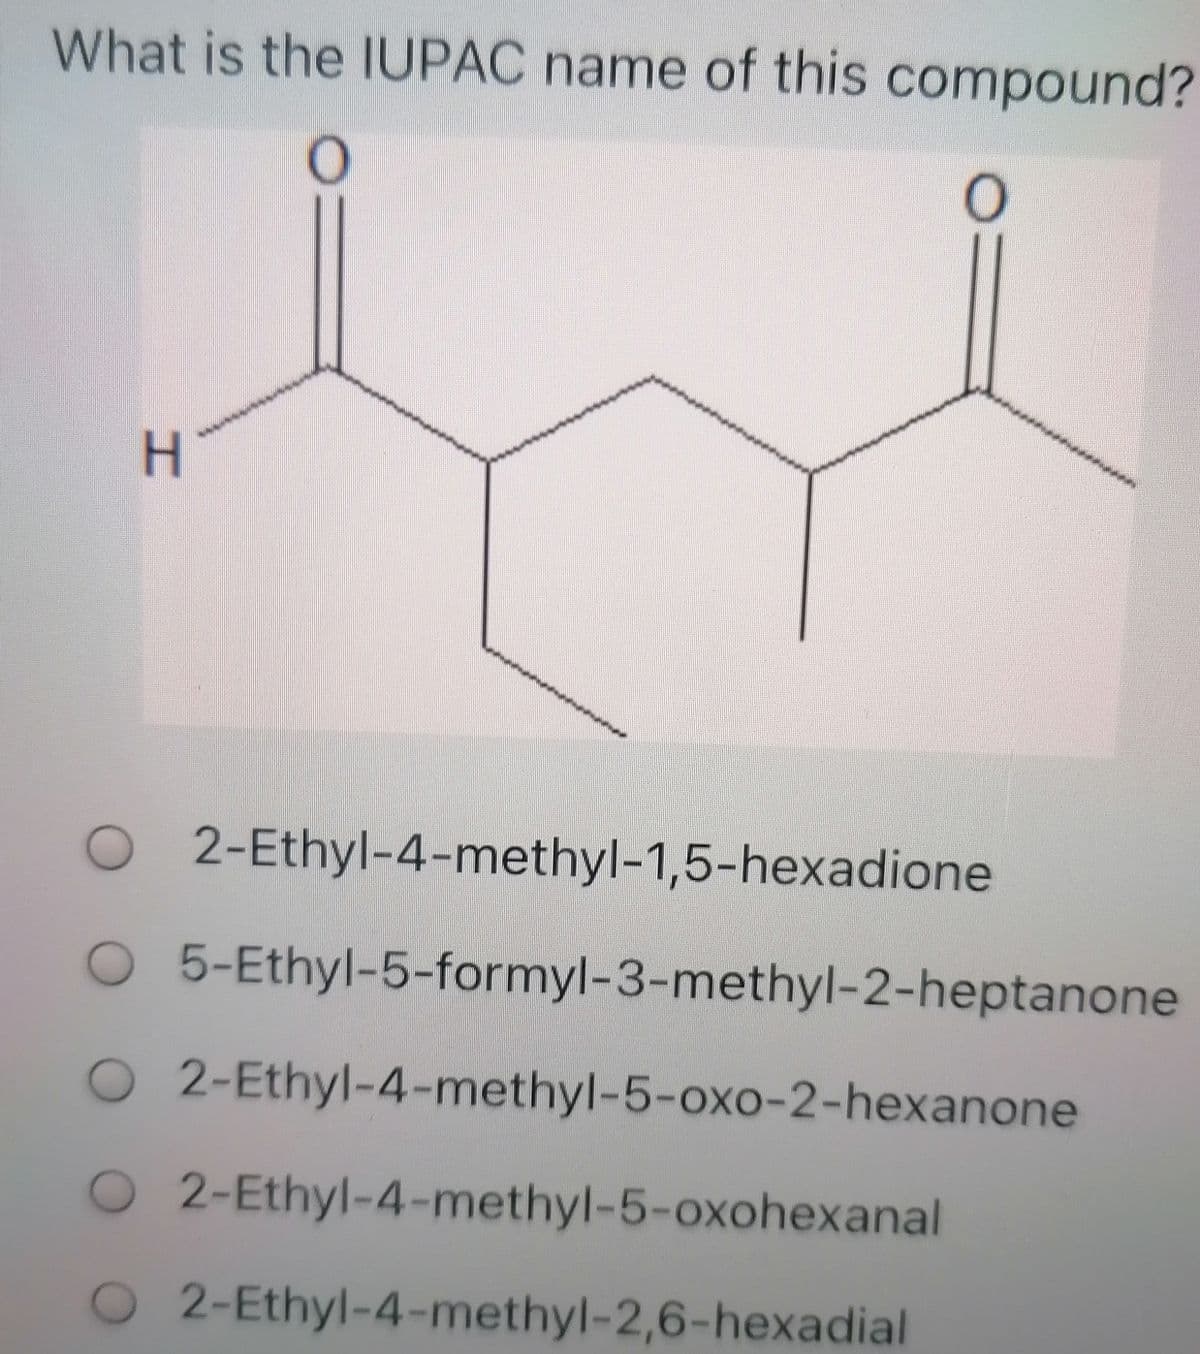 What is the IUPAC name of this compound?
O 2-Ethyl-4-methyl-1,5-hexadione
O 5-Ethyl-5-formyl-3-methyl-2-heptanone
O2-Ethyl-4-methyl-5-oxo-2-hexanone
O2-Ethyl-4-methyl-5-oxohexanal
O2-Ethyl-4-methyl-2,6-hexadial
